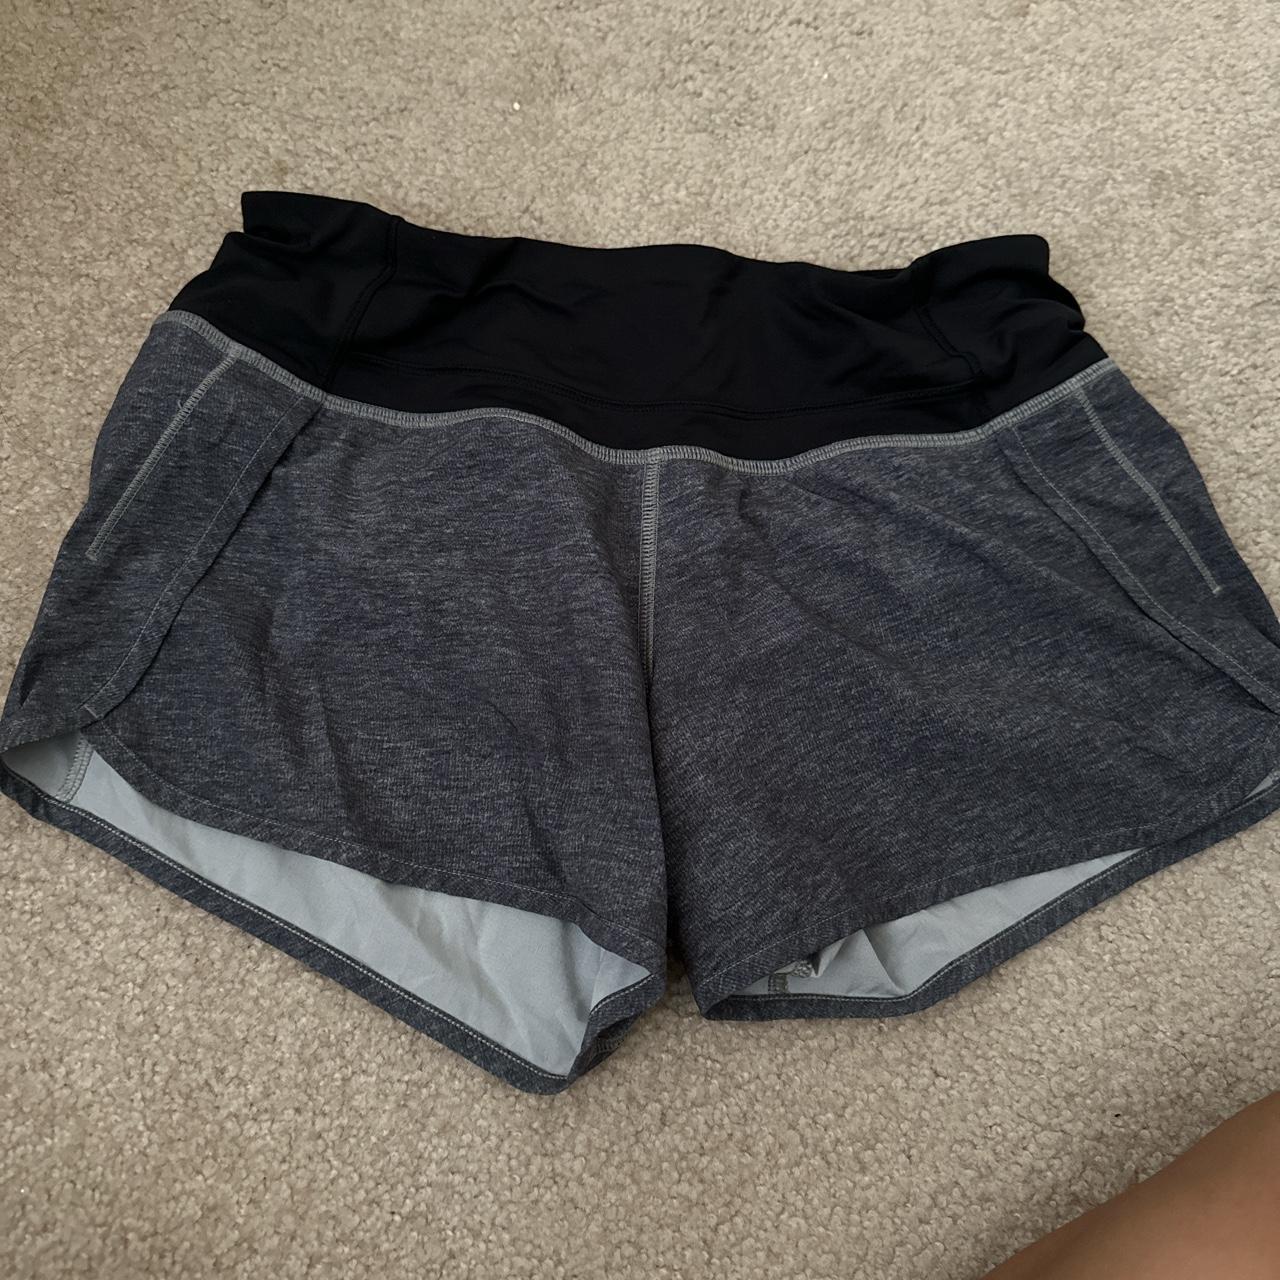 Lululemon Speed Up Shorts size 4 with 4” inseam - Depop